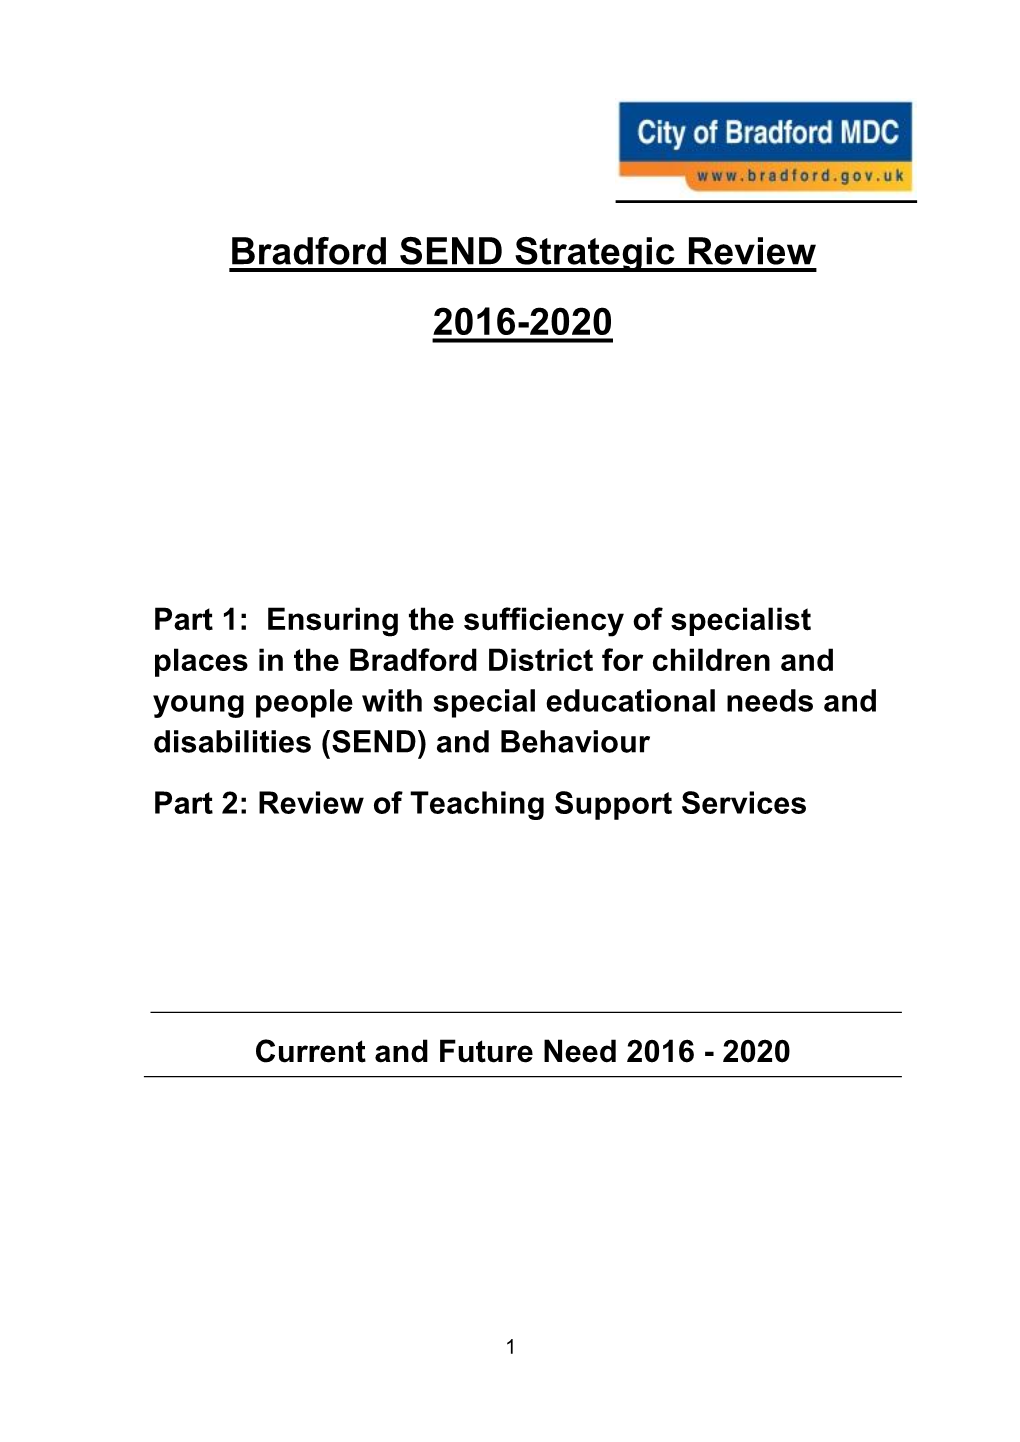 Bradford SEND Strategic Review 2016-2020